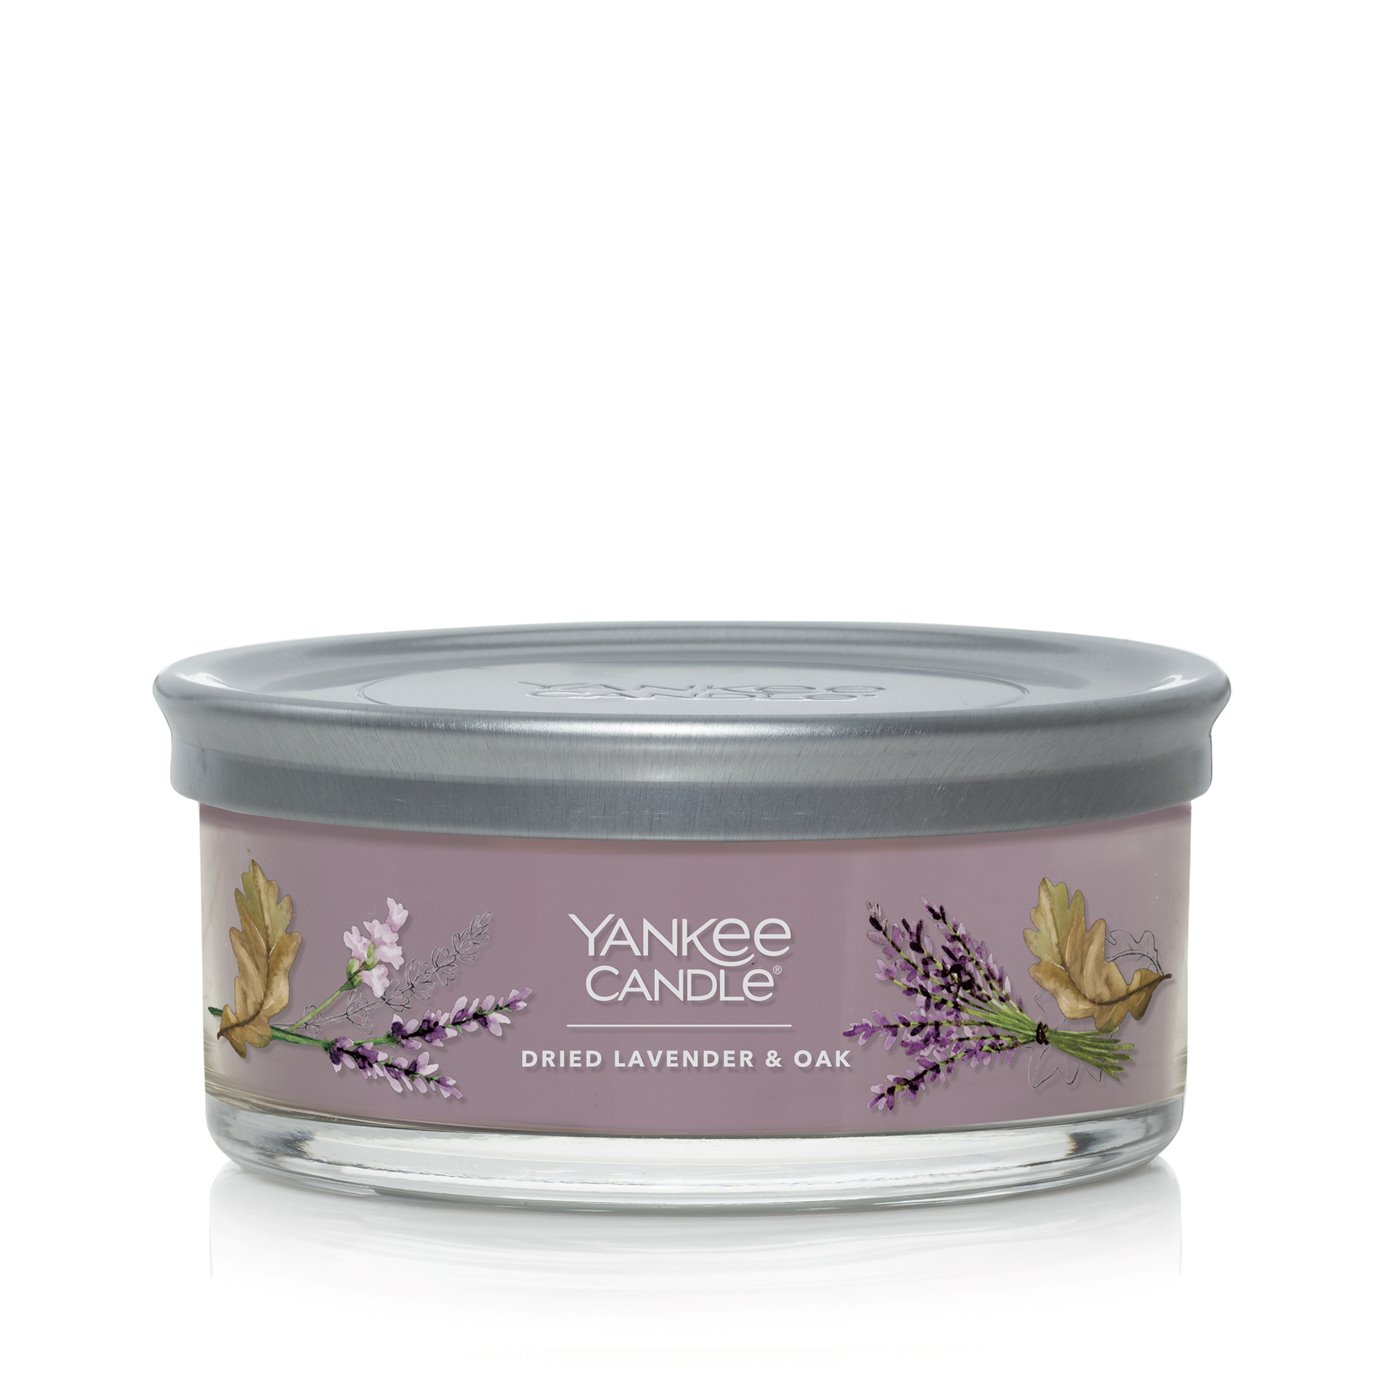 Yankee Candle Dried Lavender & Oak